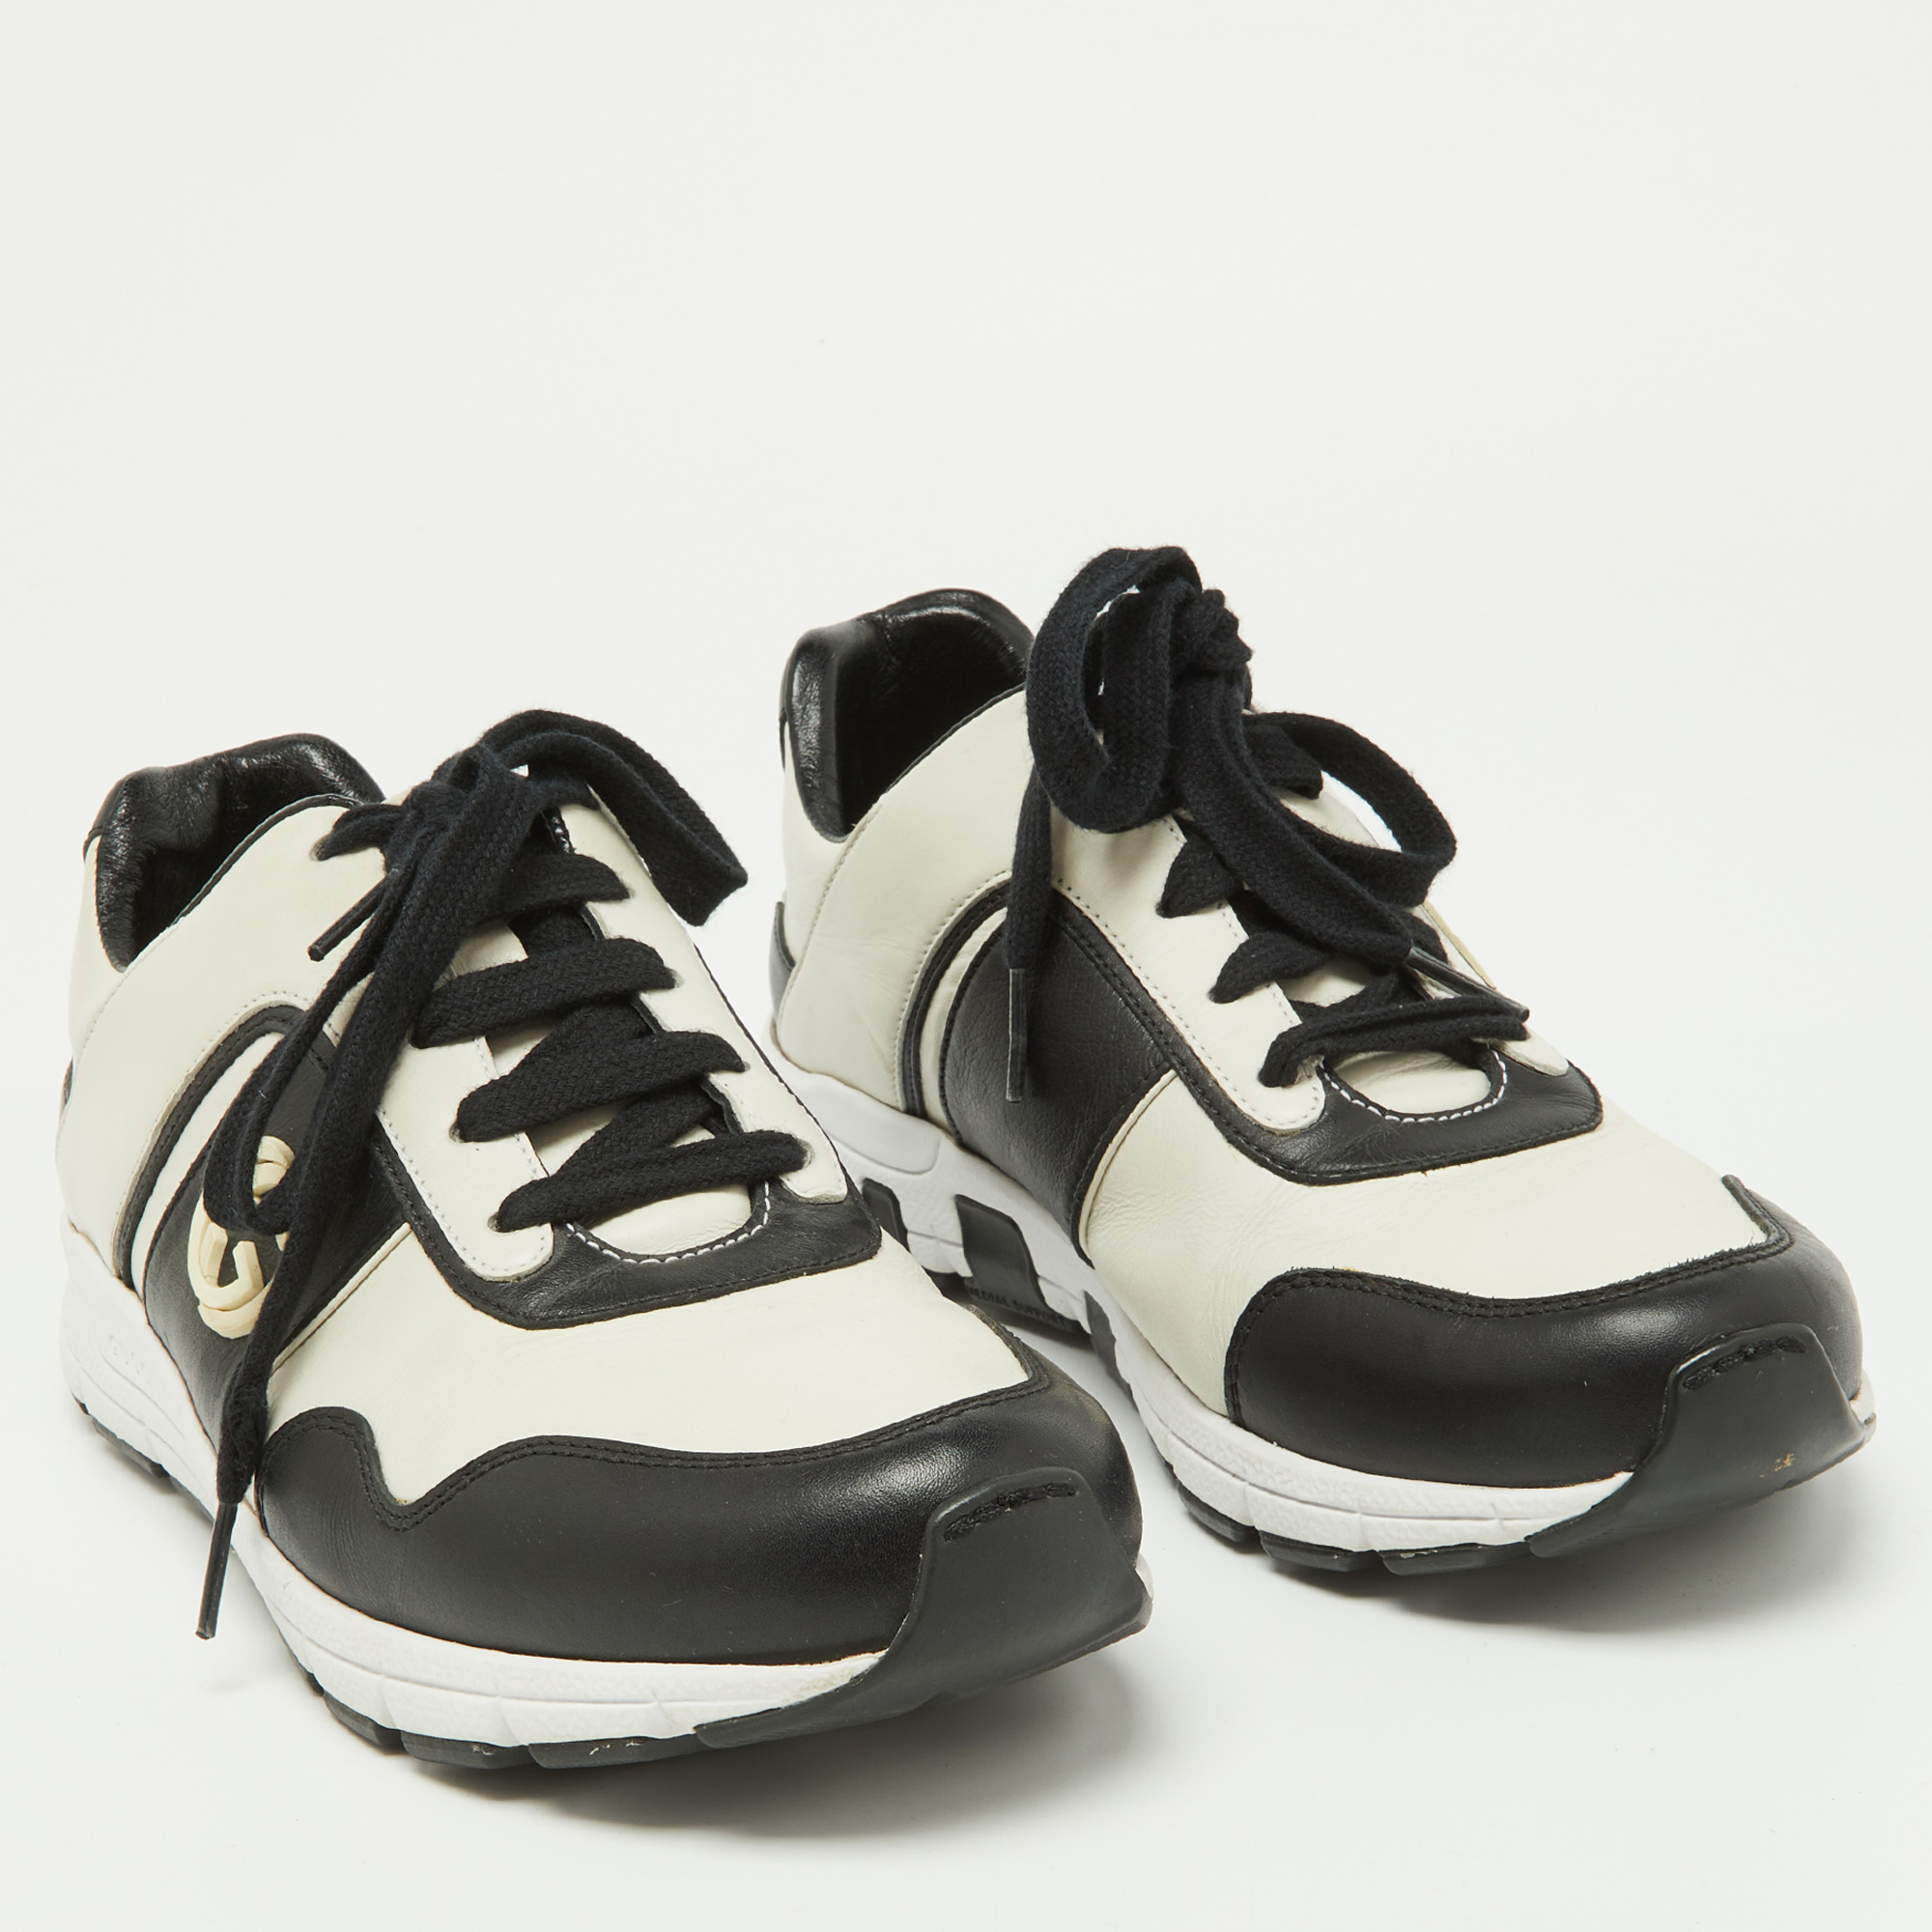 Gucci Black/White Leather Miro Sneakers Size 38.5